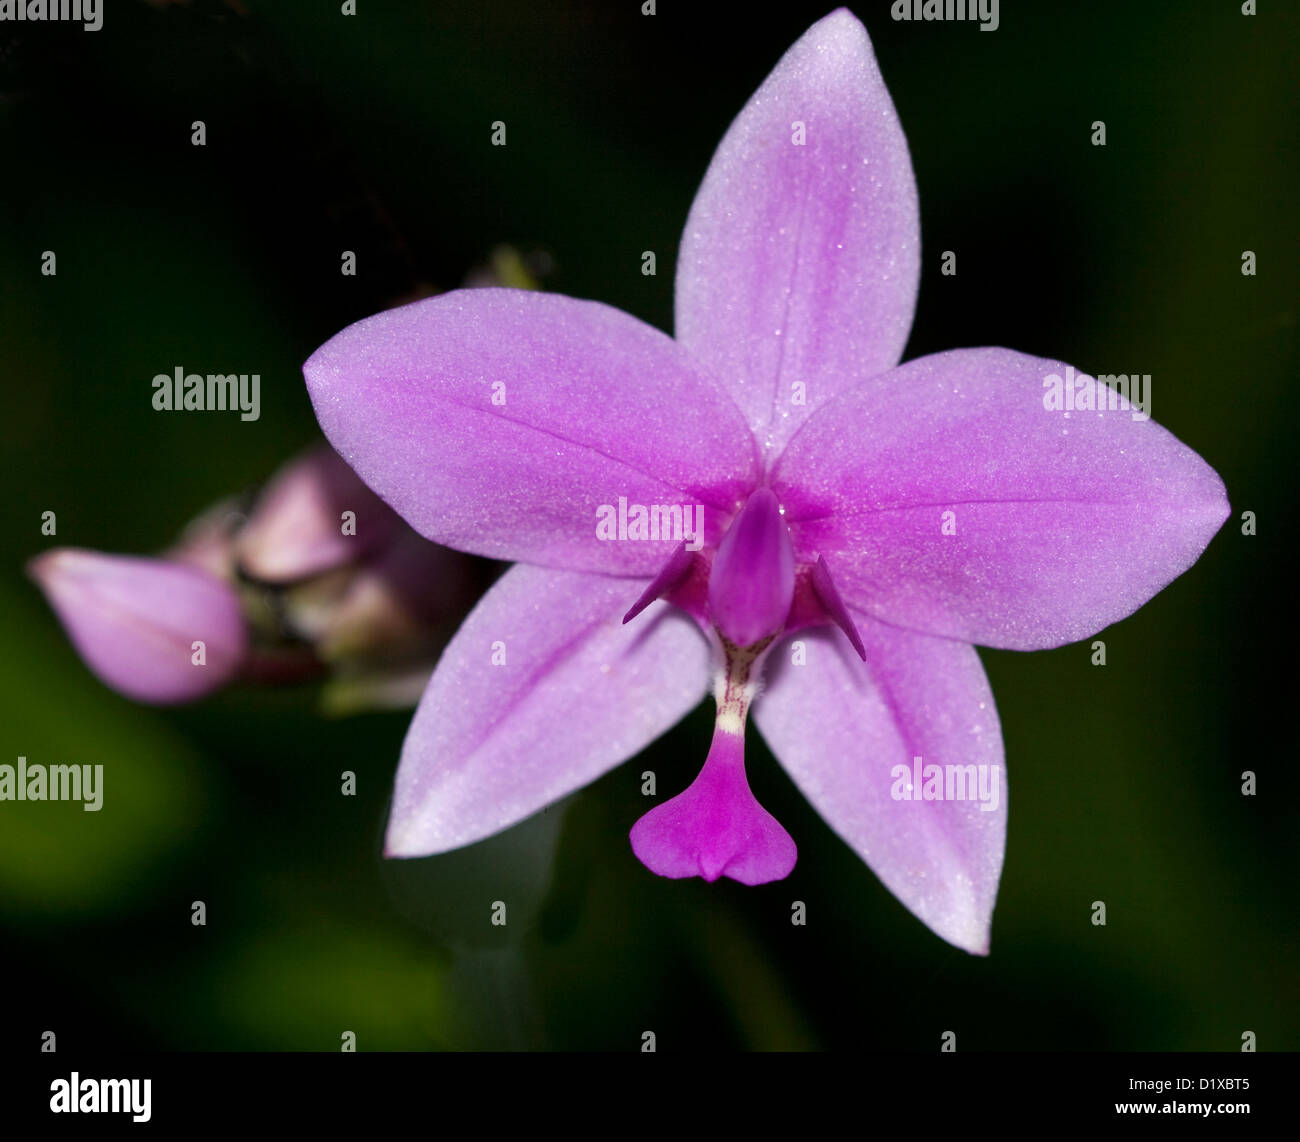 Beautiful pink / mauve flower of Spathoglottis plicata, Australian ground orchid, with raindrops on petals on dark background Stock Photo